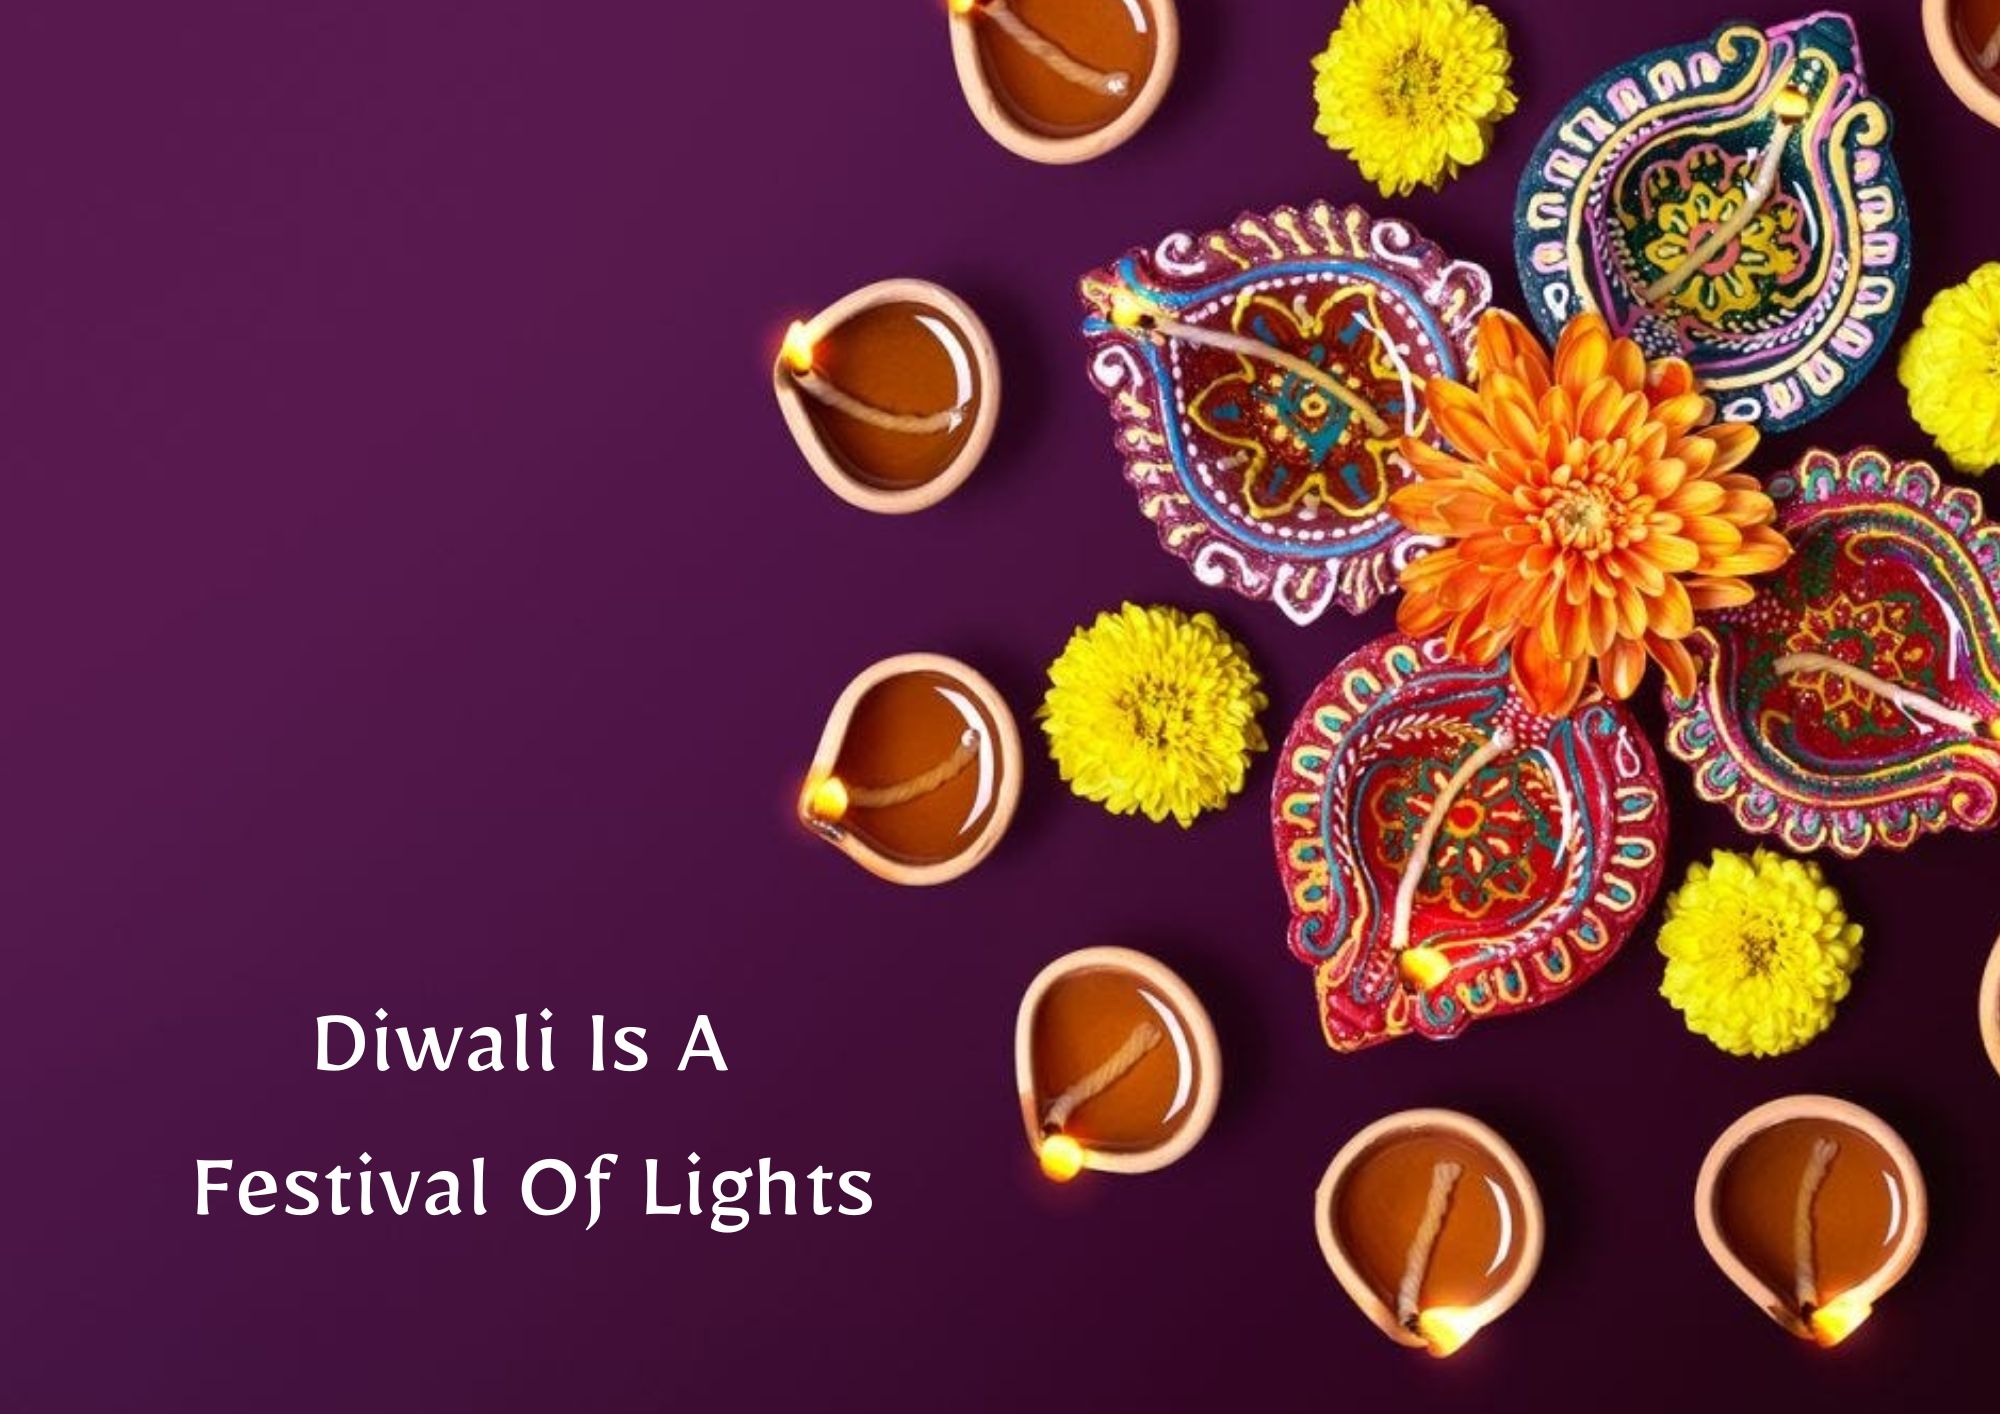 Diwali Is A Festival Of Lights (The Festival Of Lights Diwali)